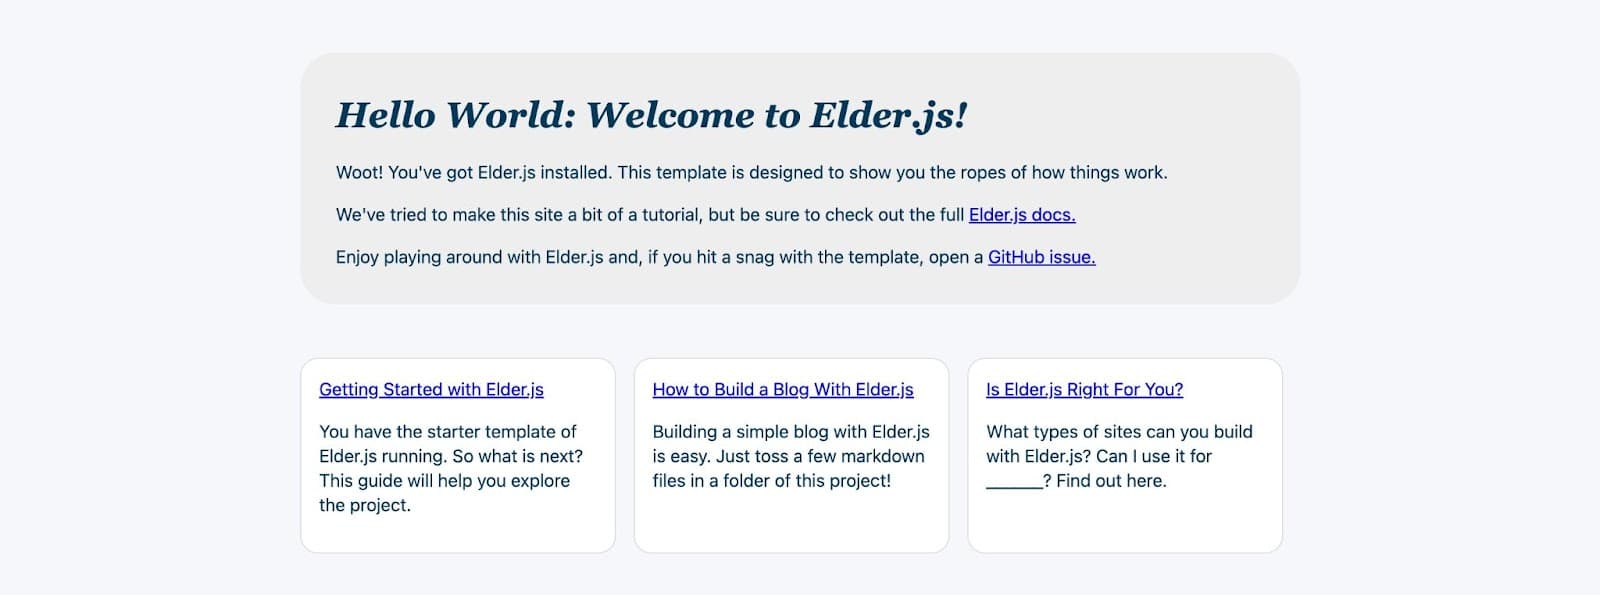 مثال شروع سریع Elder.js